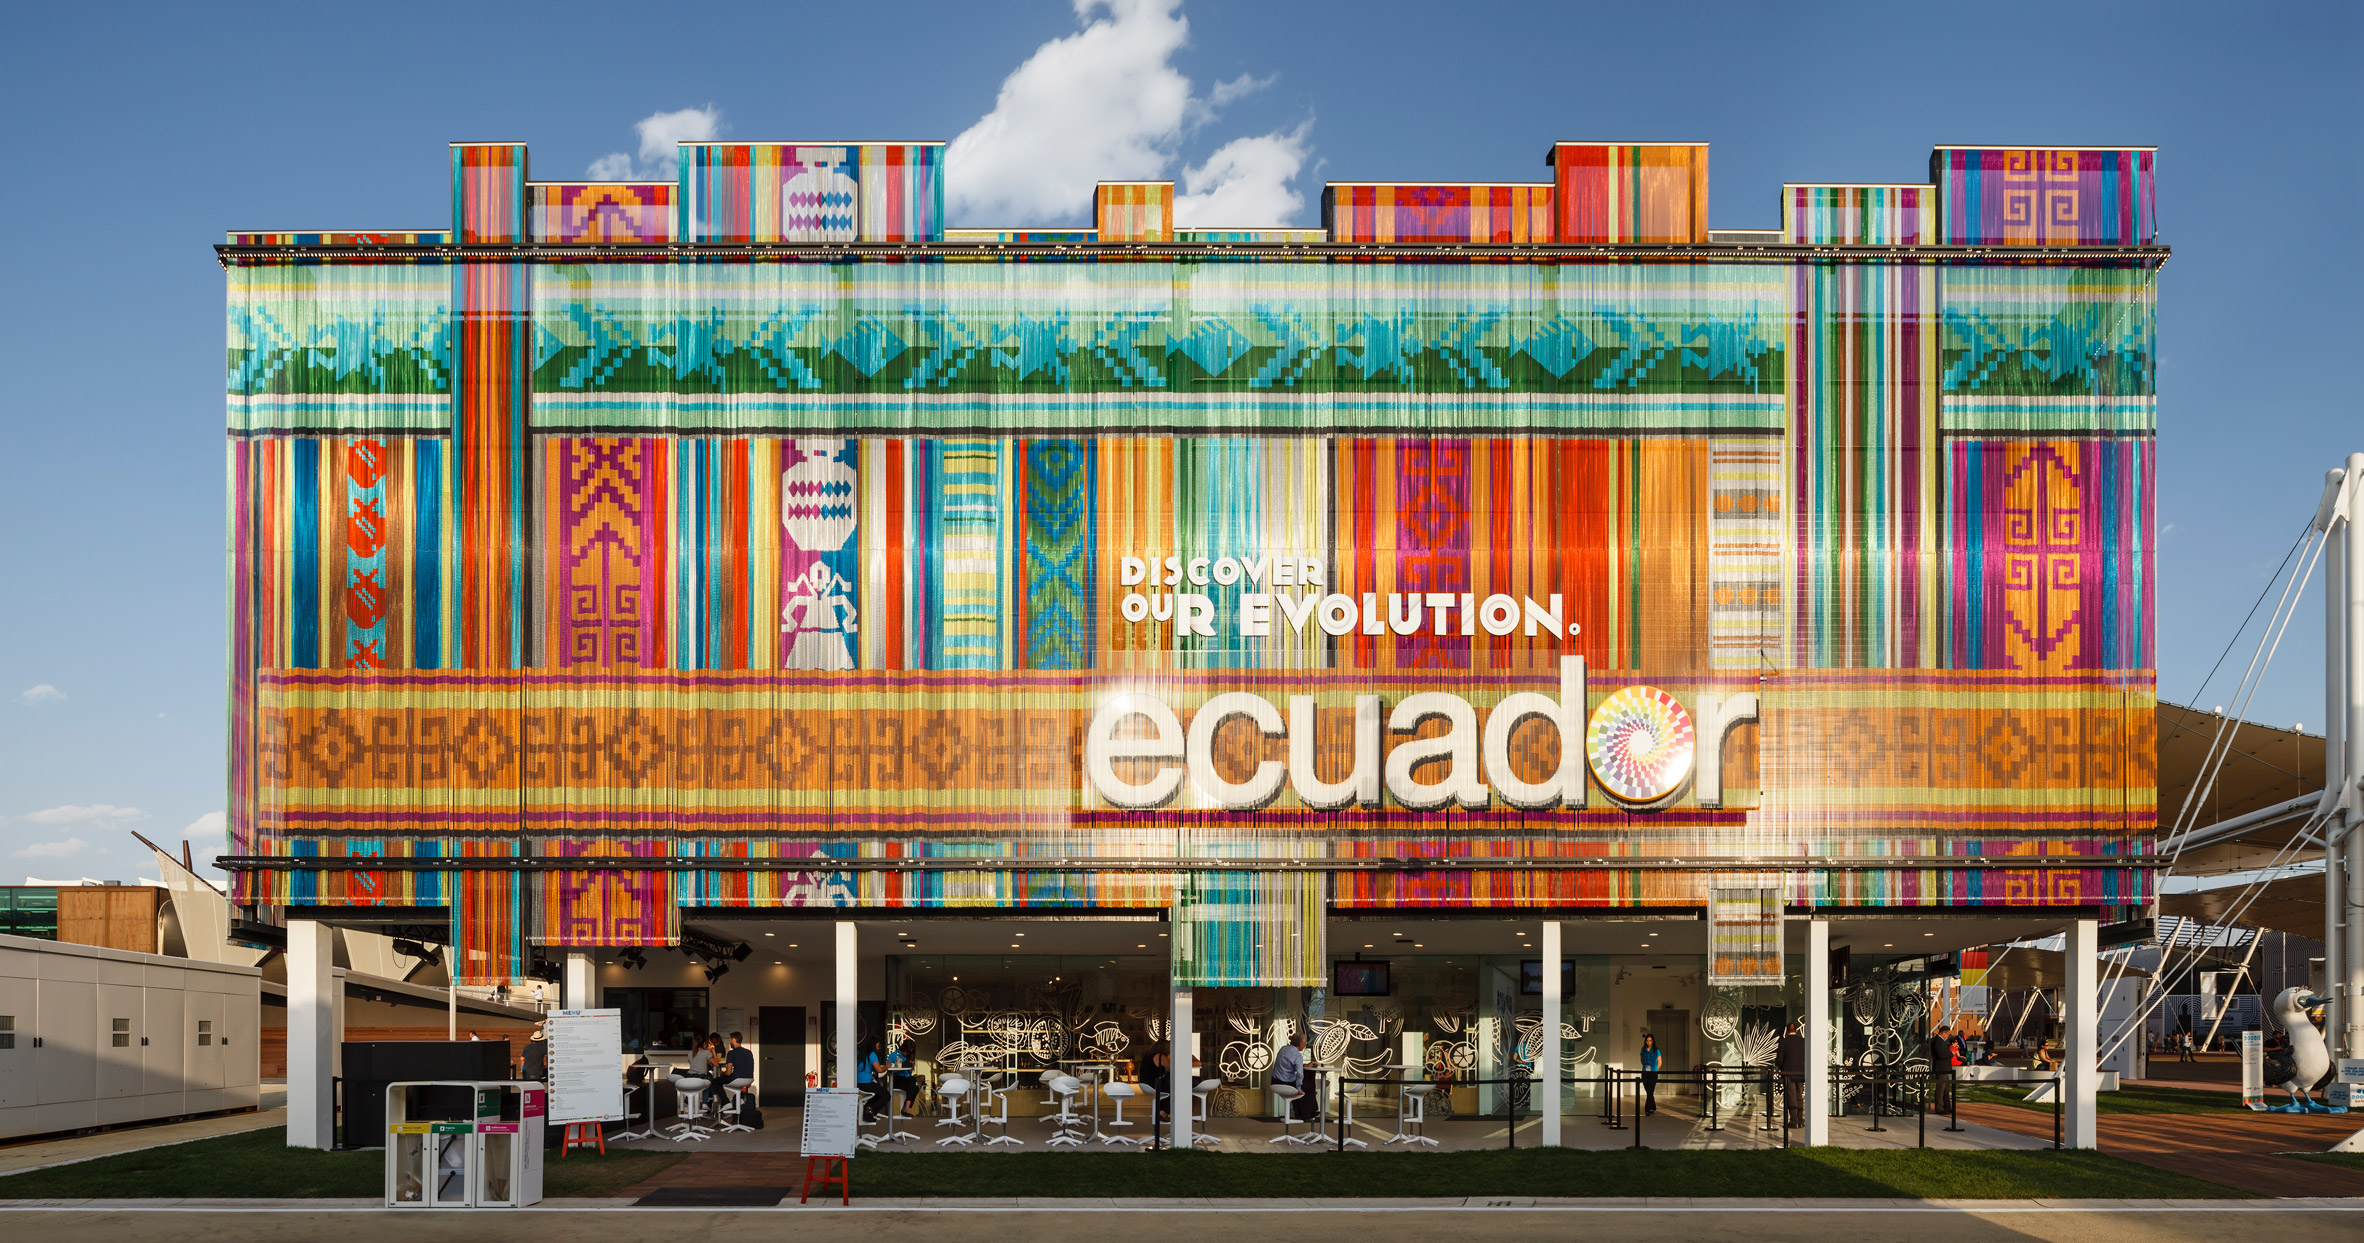 Kriskadecor outdoor cladding system on the Ecuador Pavilion at Milan Expo 2015